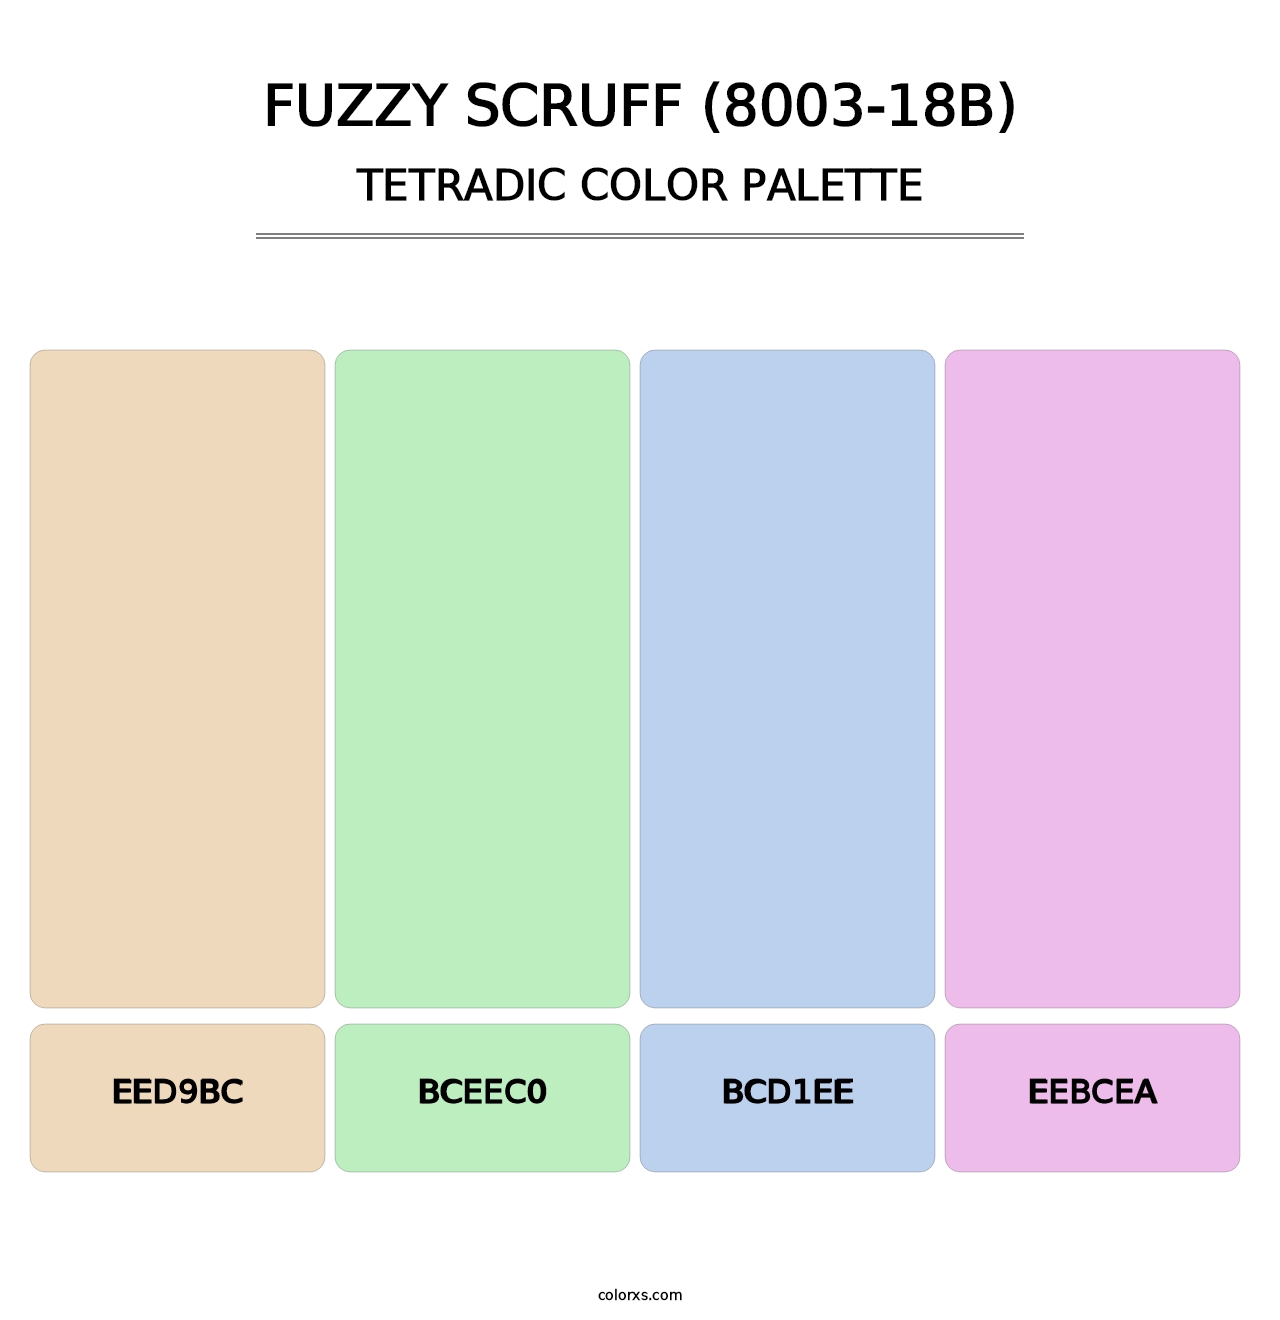 Fuzzy Scruff (8003-18B) - Tetradic Color Palette